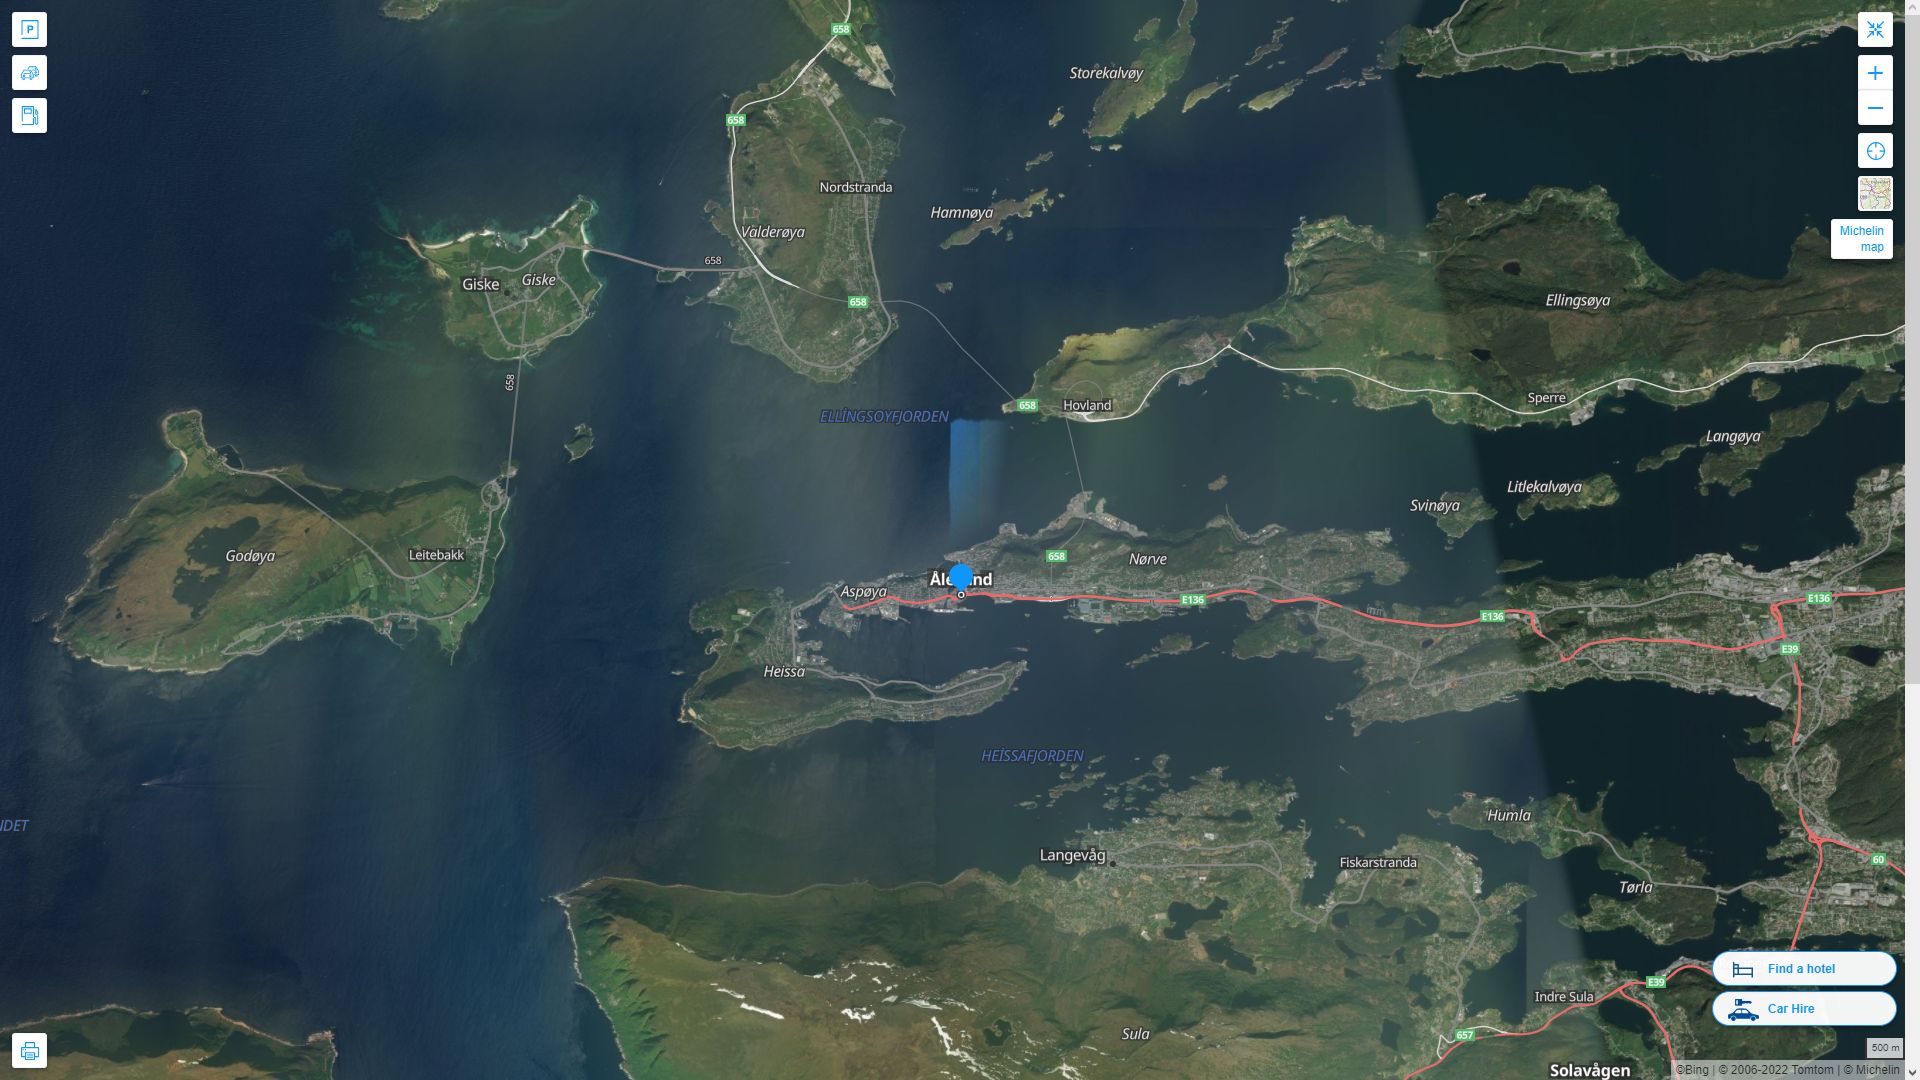 Alesund Norvege Autoroute et carte routiere avec vue satellite